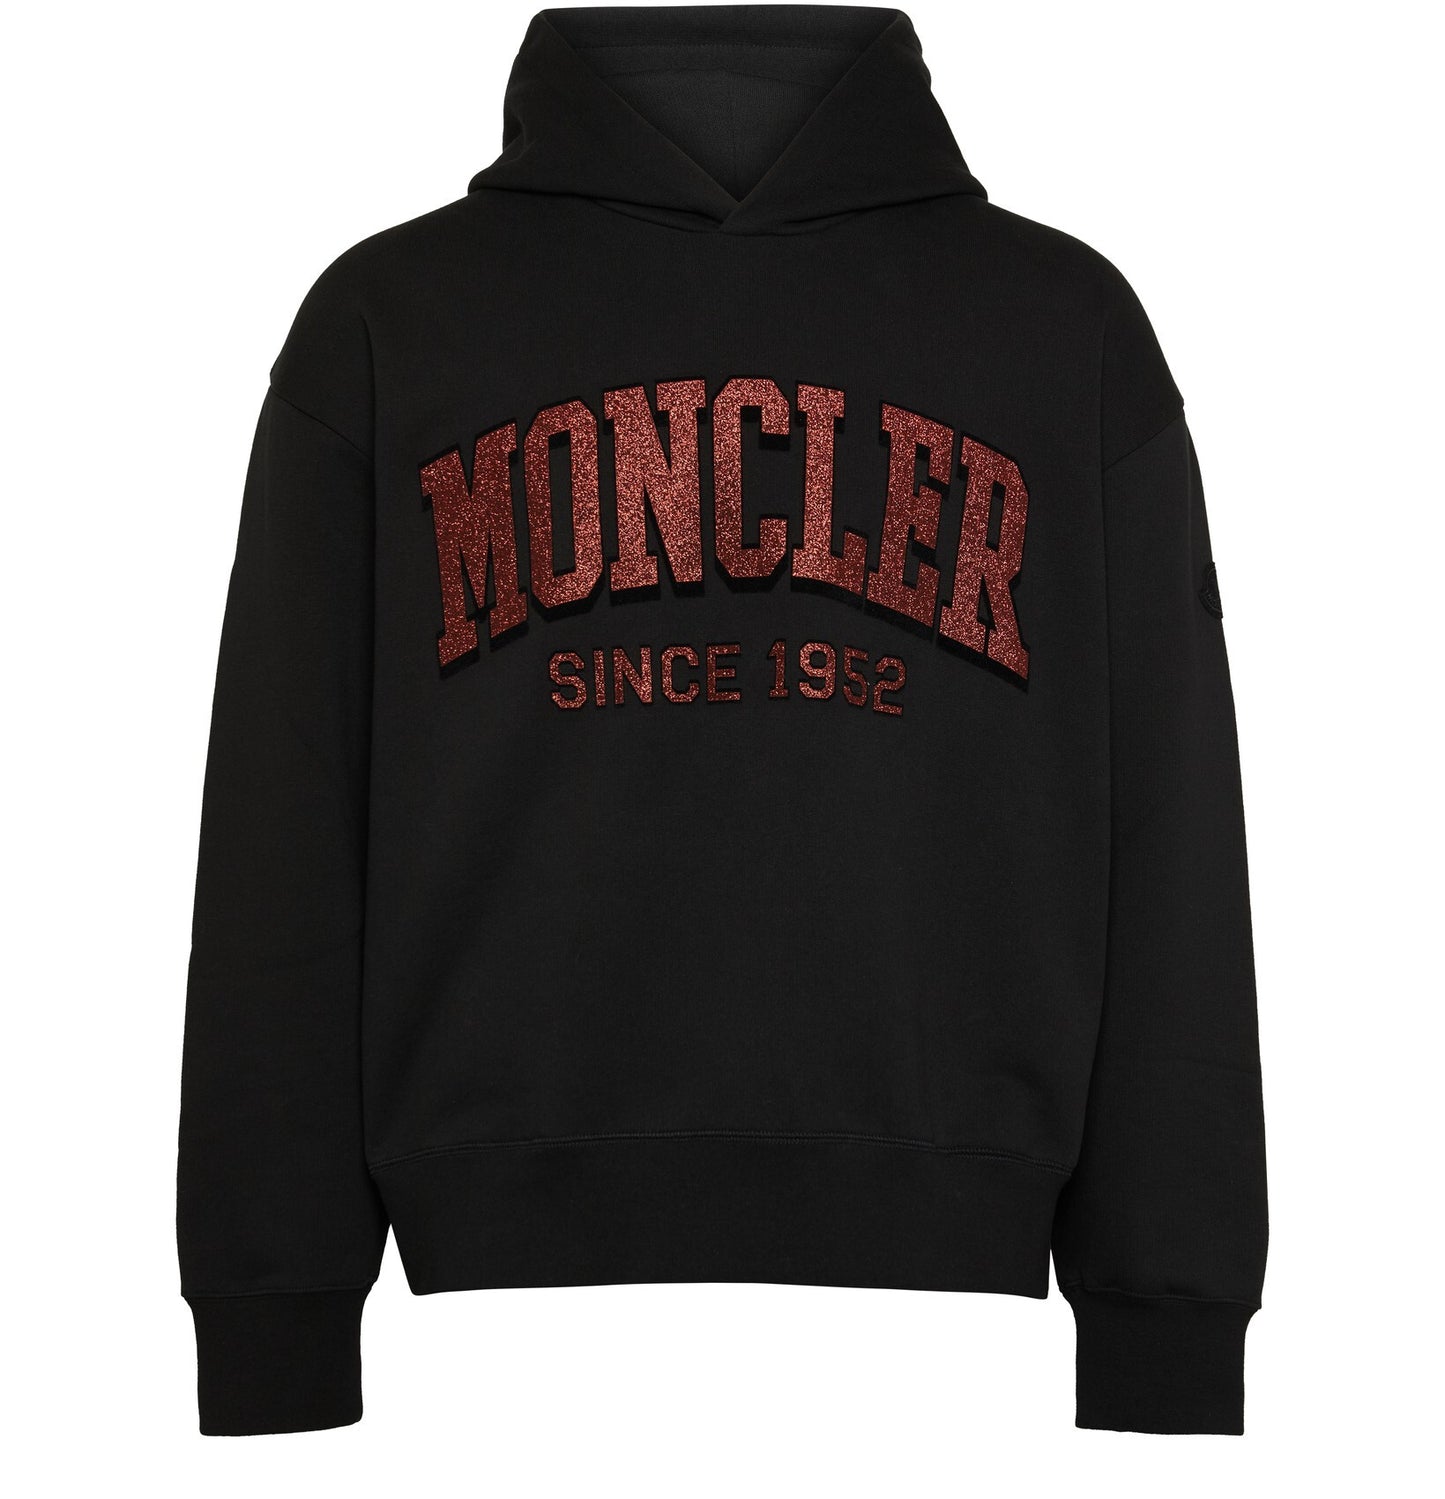 Moncler Men Red Glitter Logo Drawstrings Hooded Pullover Cotton Sweatshirt Black